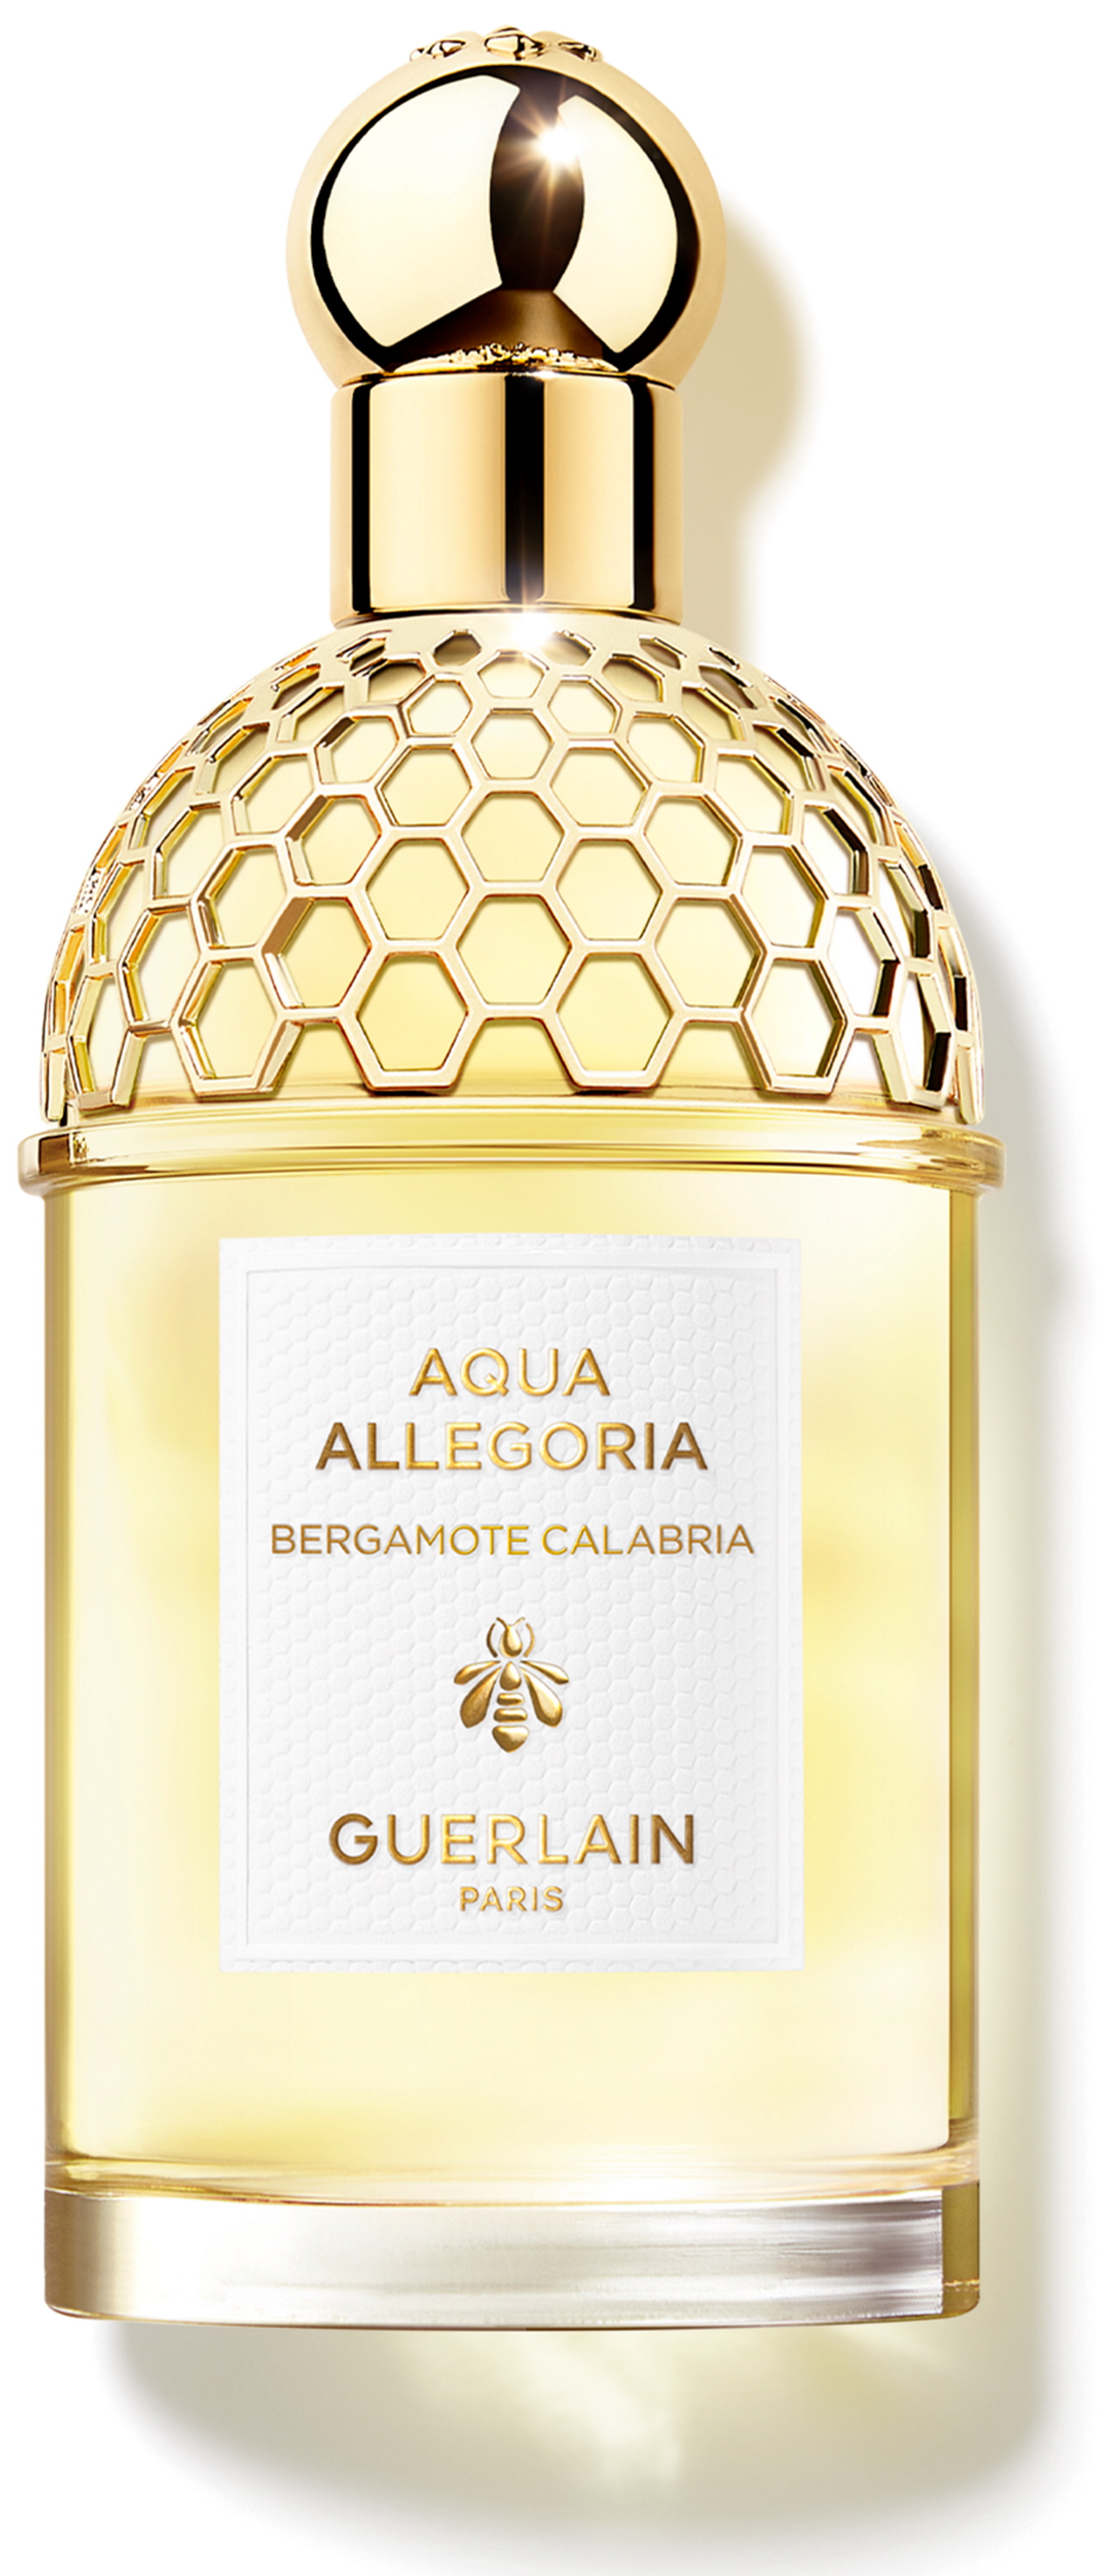 Parfums pour l'été 2022 GUERLAIN - Aqua Allegoria 22 Bergamote Calabria